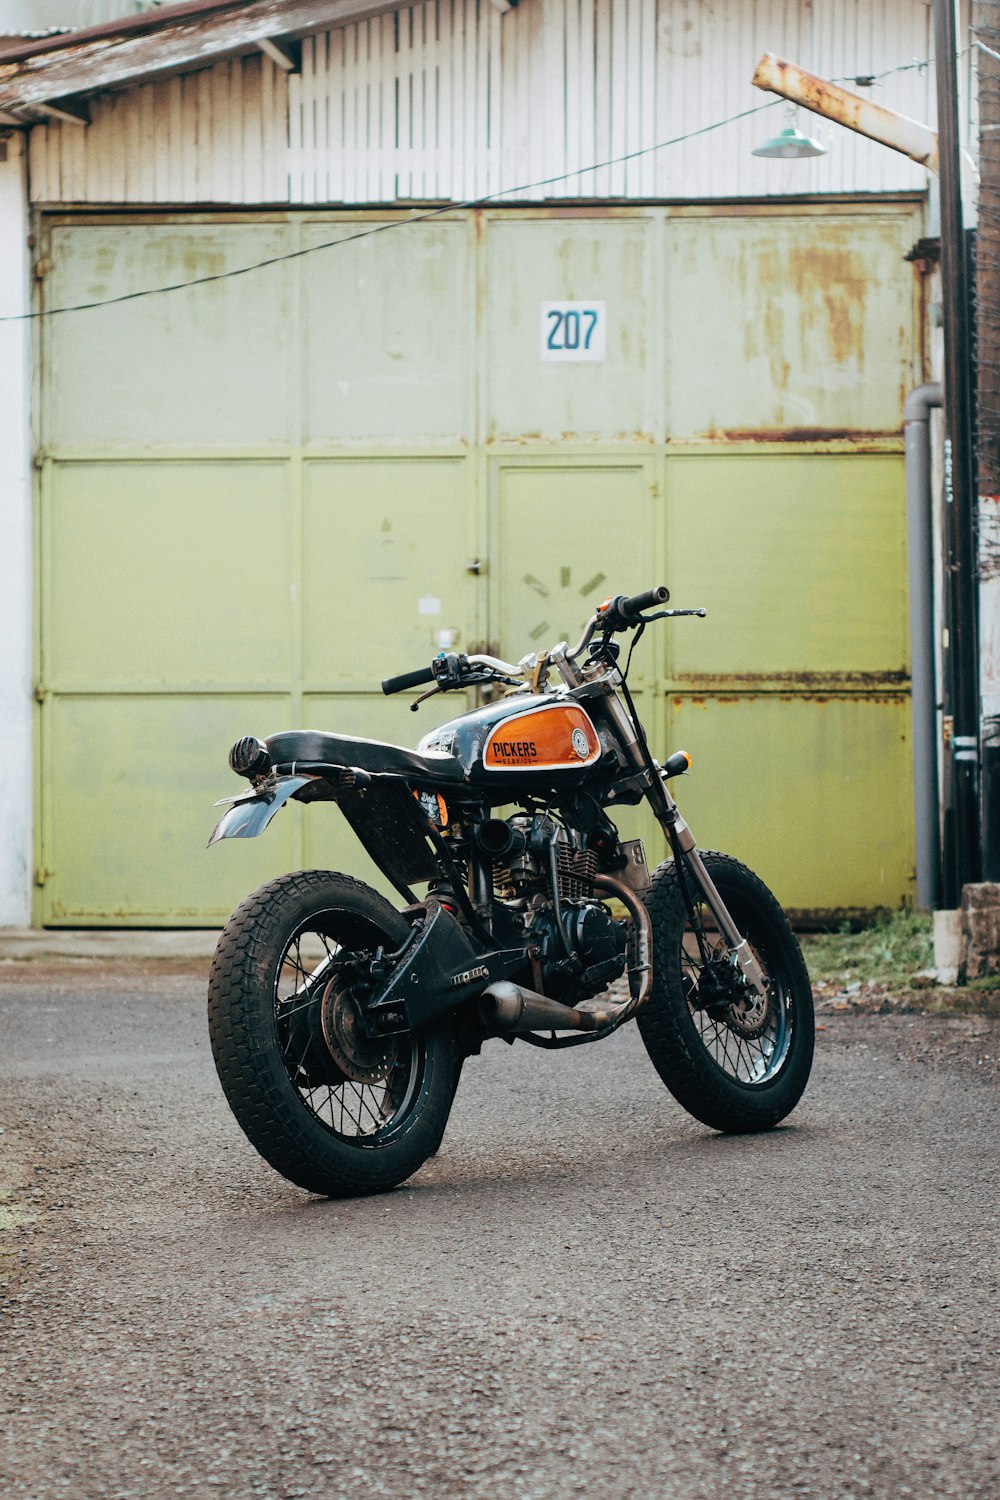 Classic black and orange motorcycle